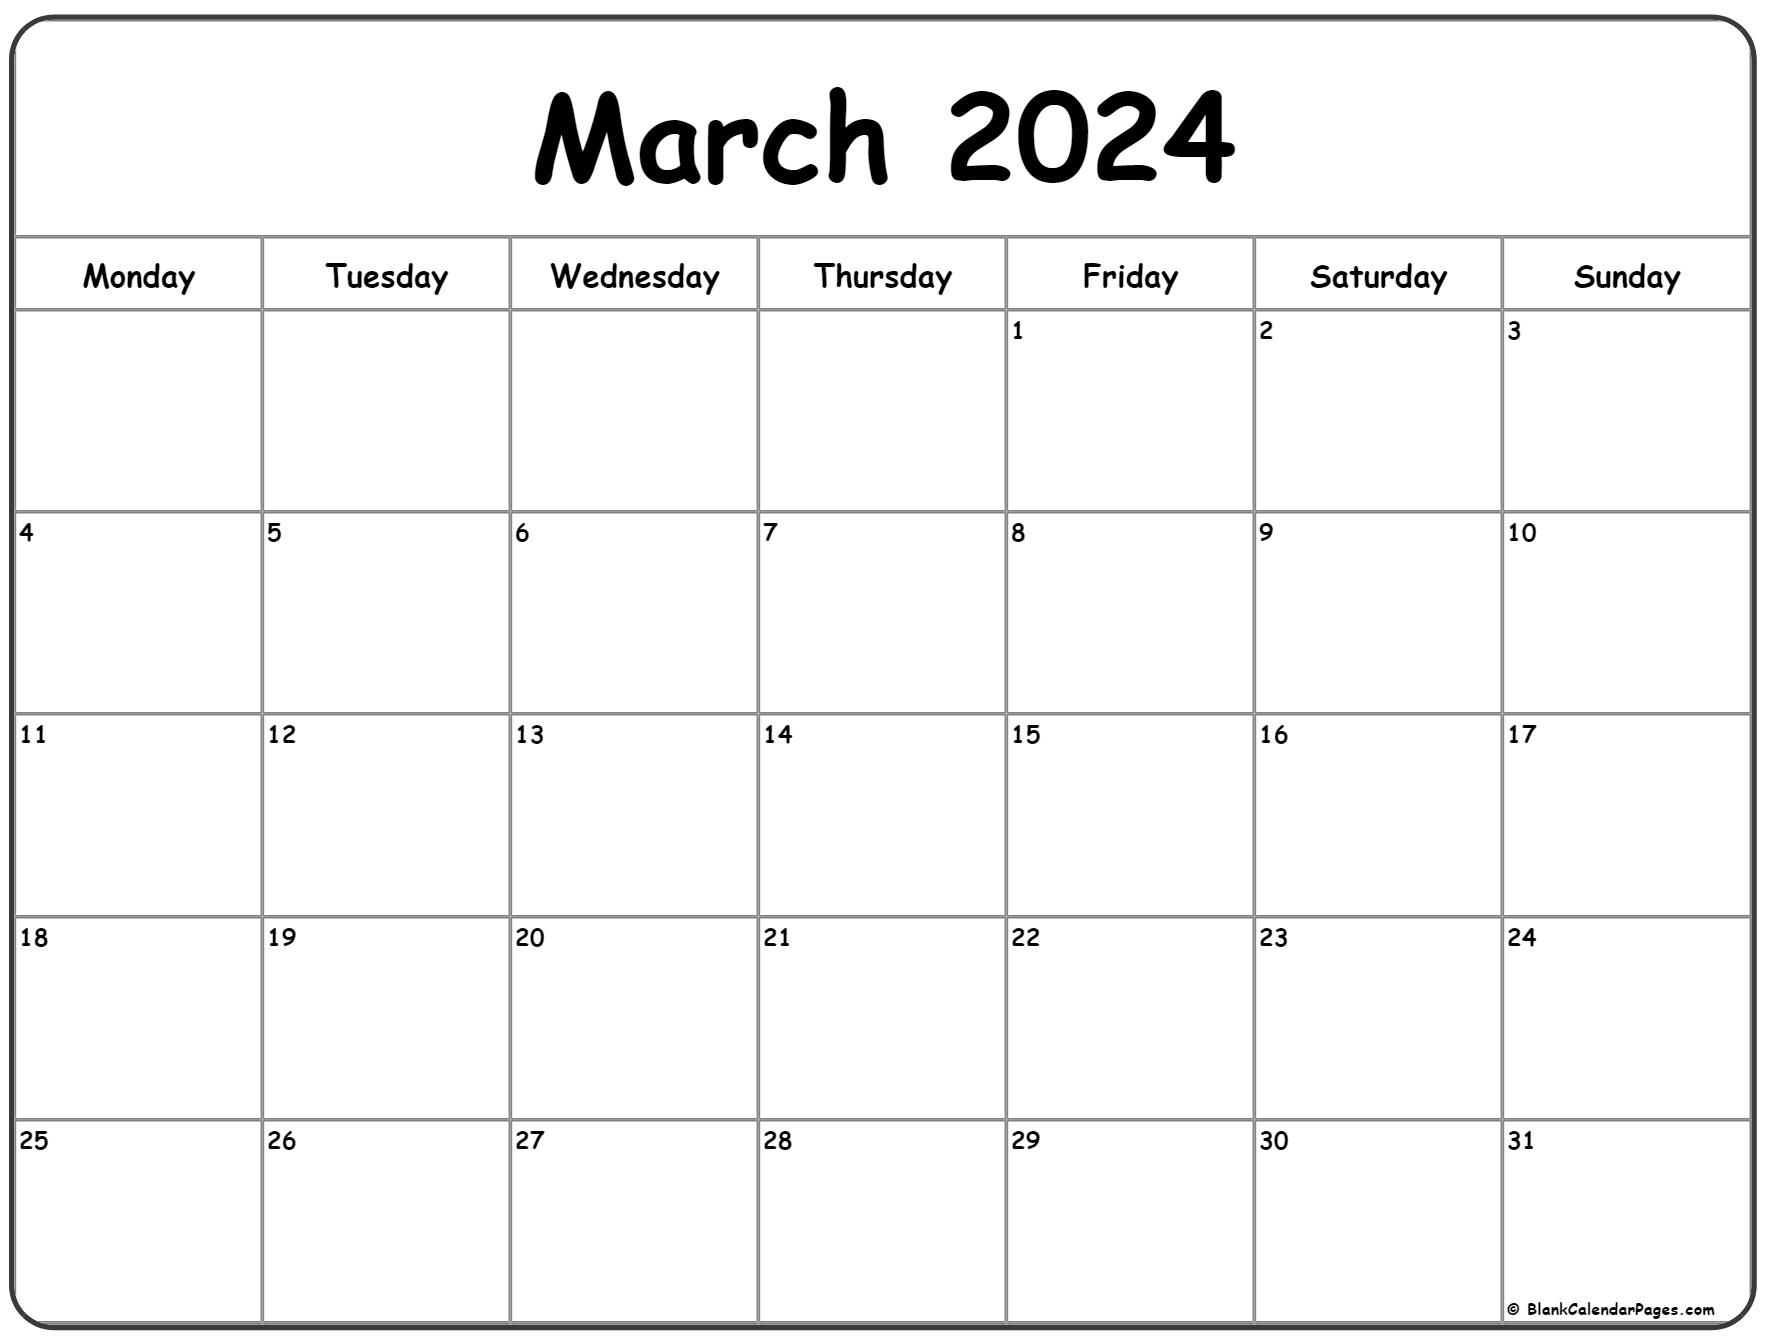 March 2024 Monday Calendar | Monday To Sunday for Calendar 2024 March Printable